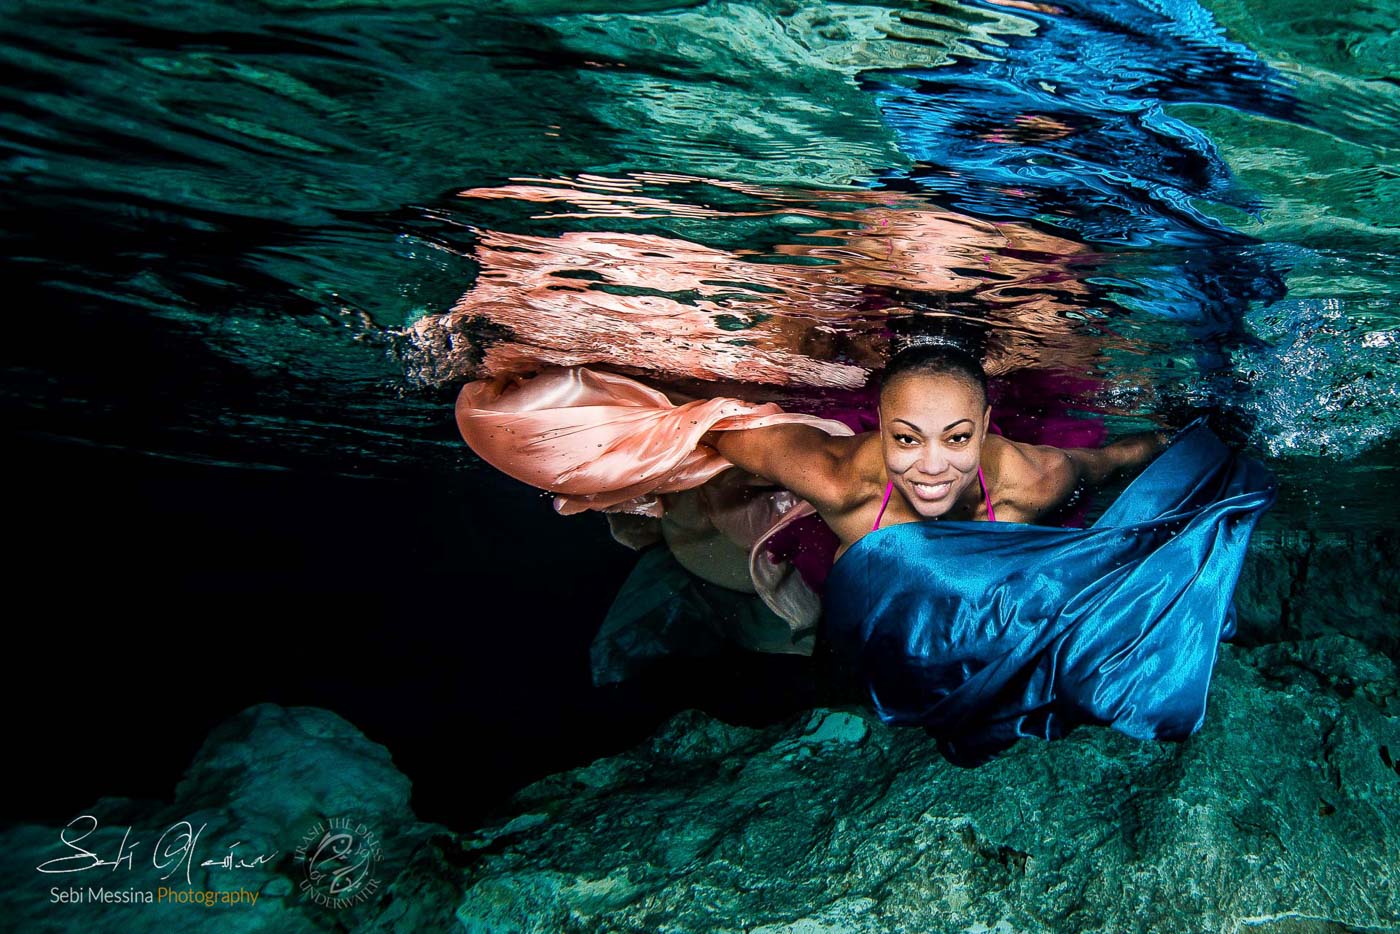 Sharlene - Underwater Cenote Photoshoots - Underwater Modeling Mexico - Sebi Messina Photography